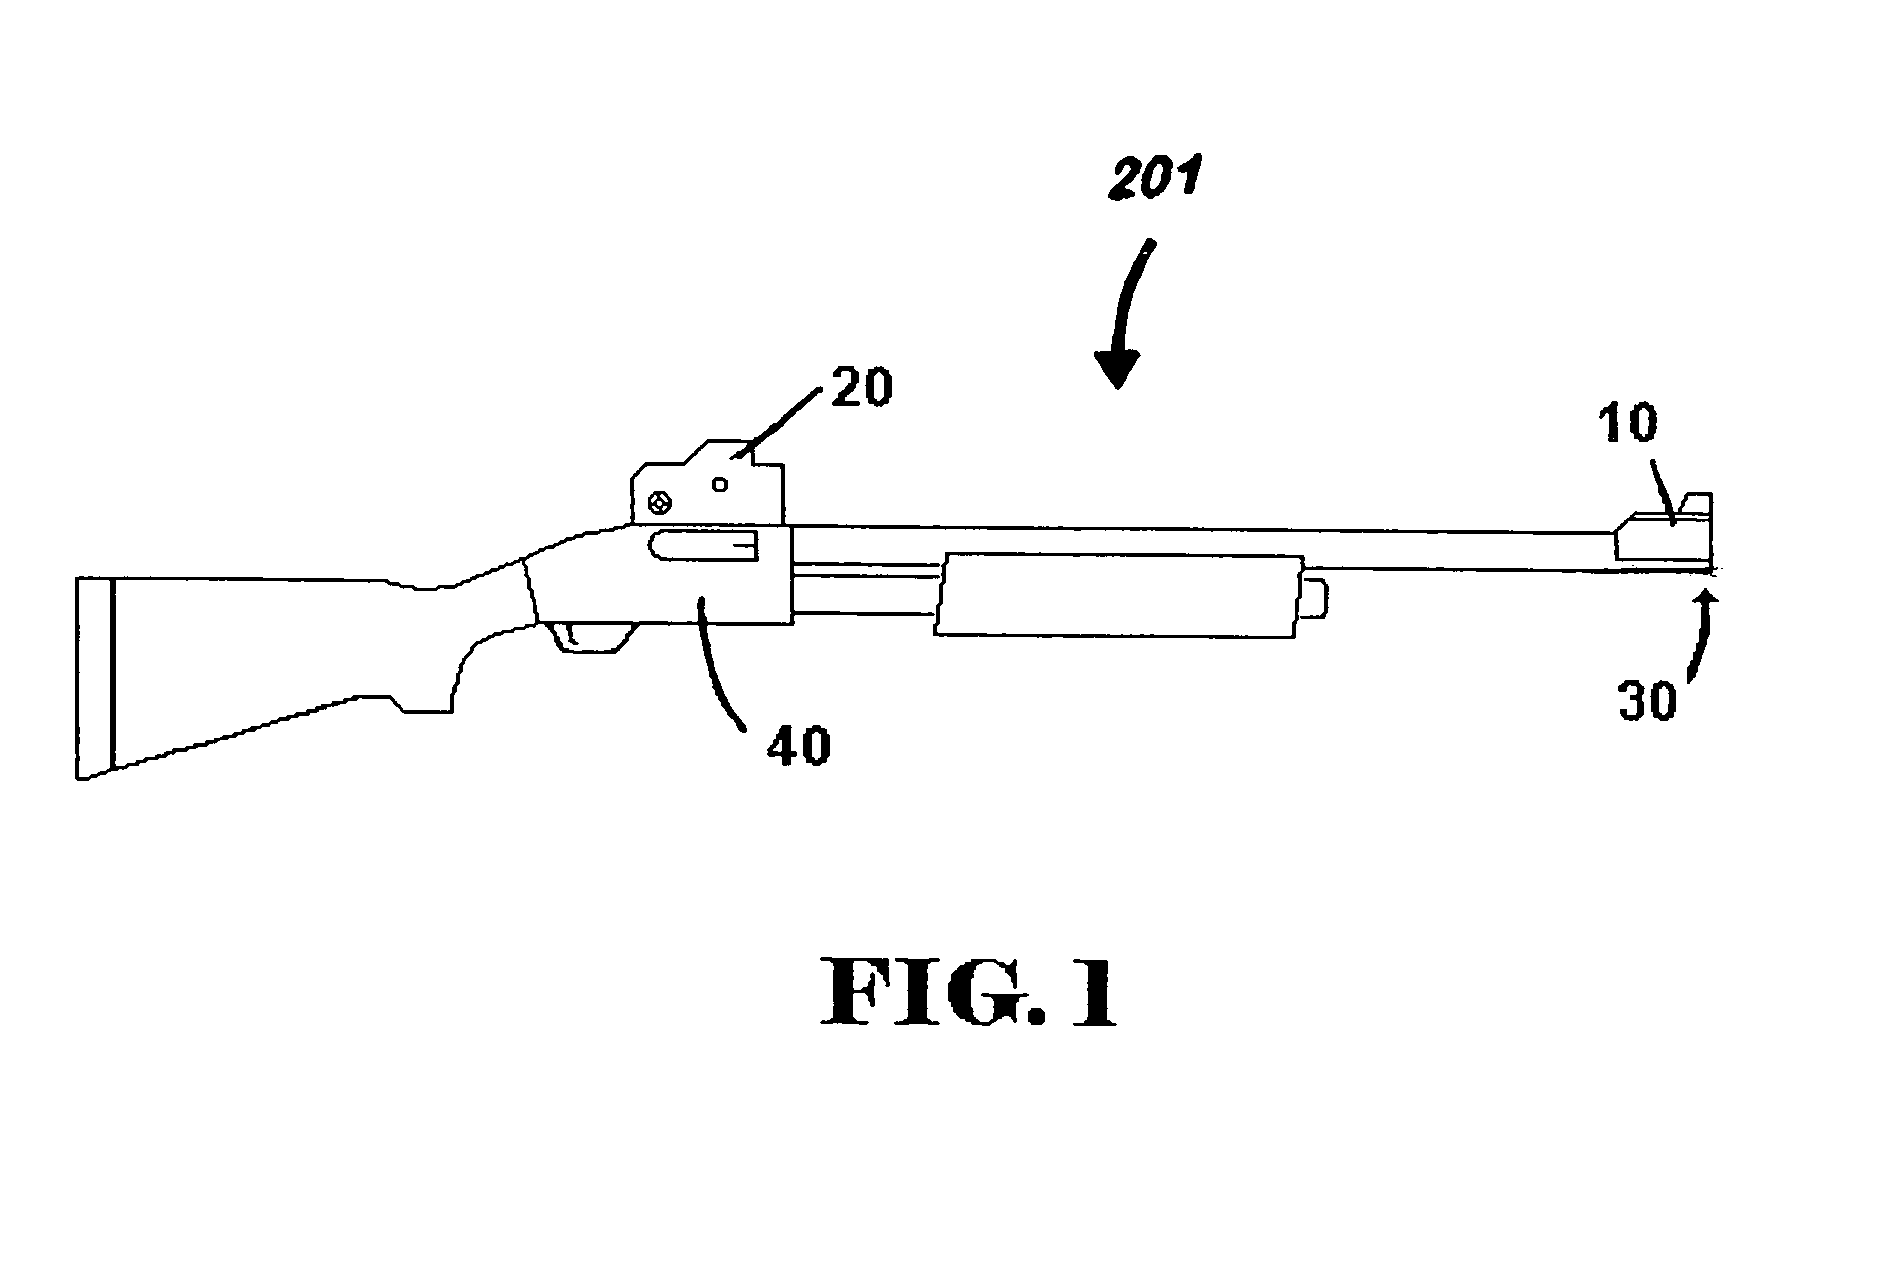 Dual-zero sight for a firearm